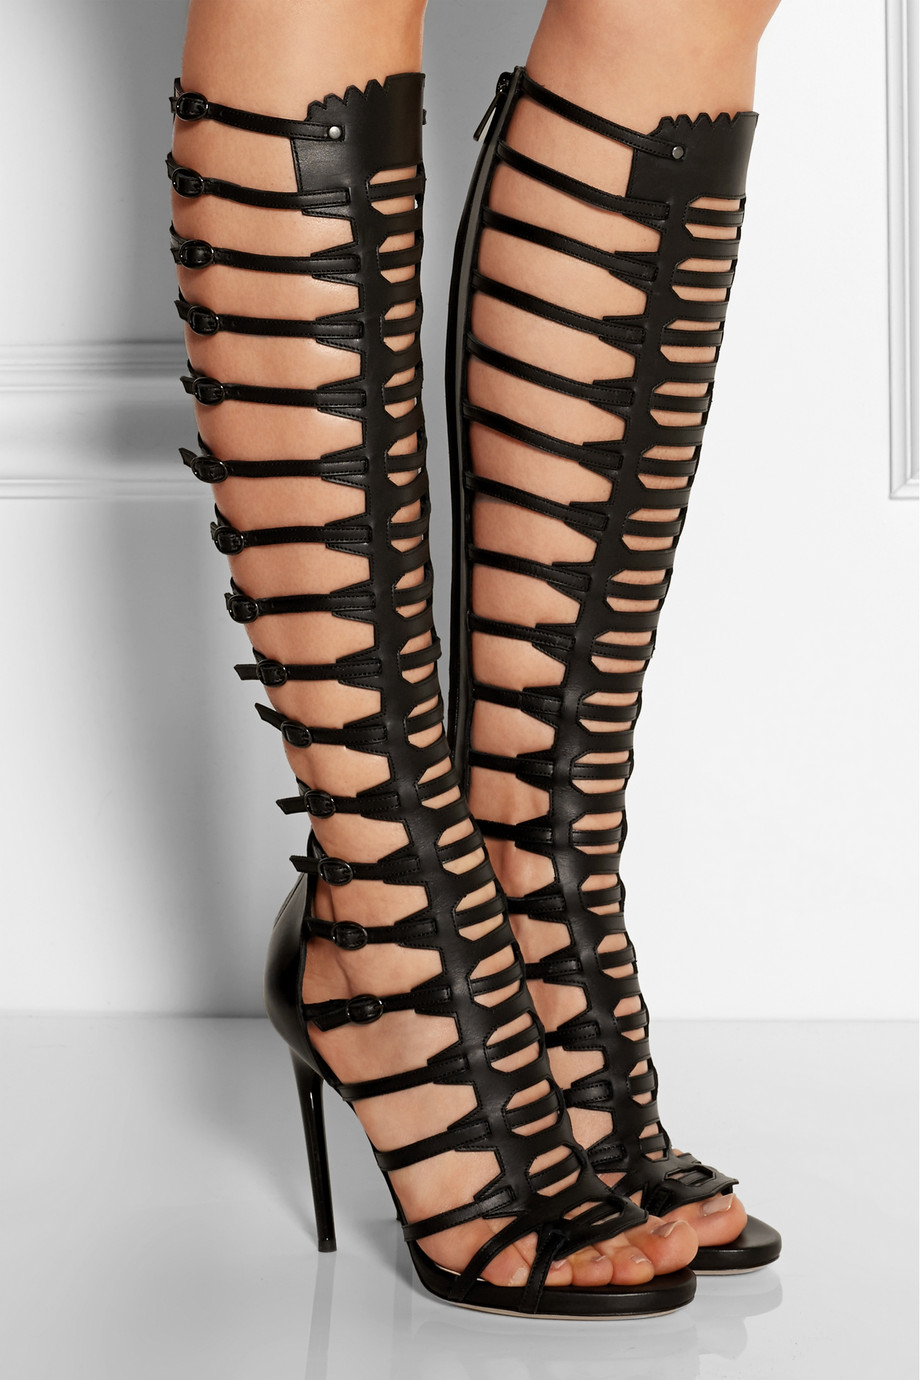 Zkshoes Fashion Sexy Women 's Black High Heel Sandals Gladiator Boots ...